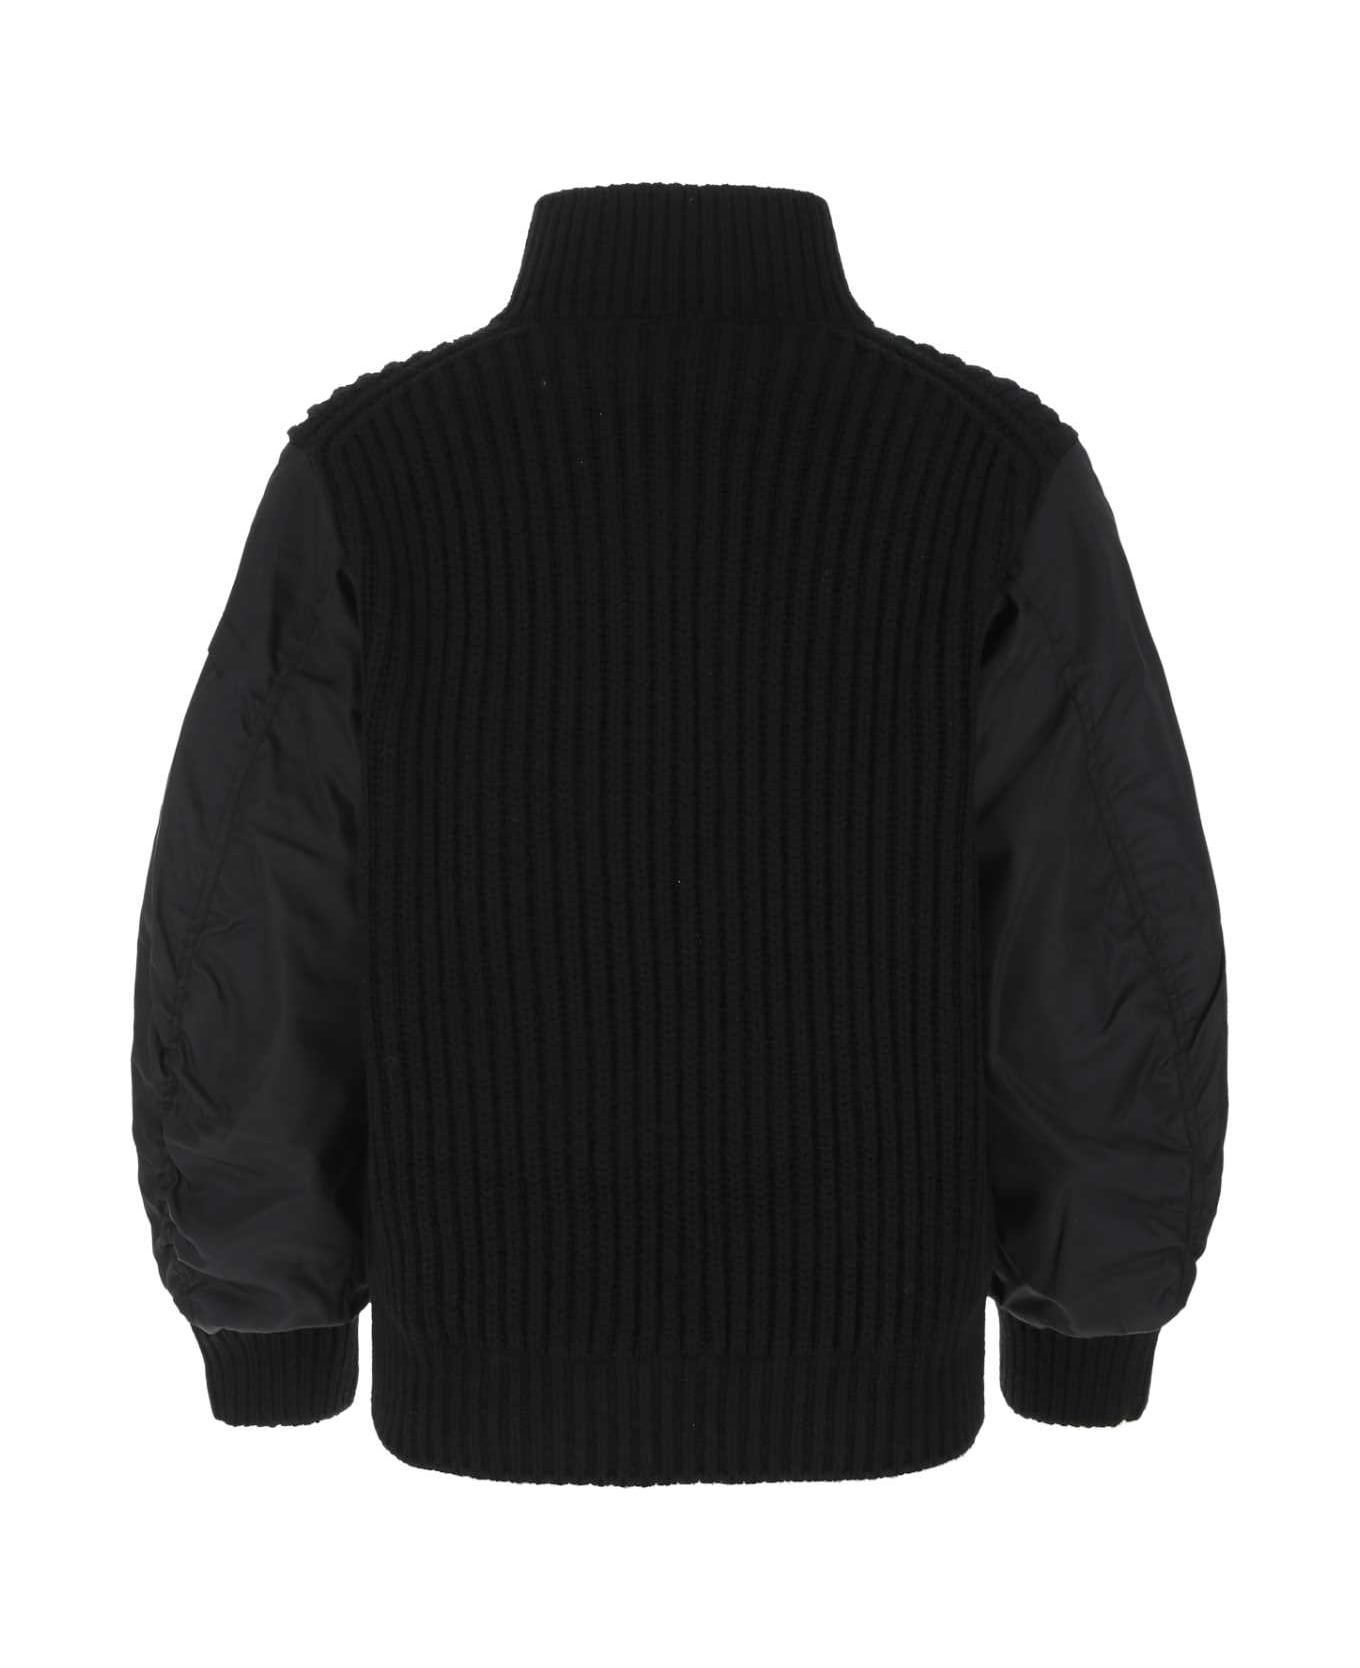 Prada Black Cashmere And Re-nylon Jacket - F0002